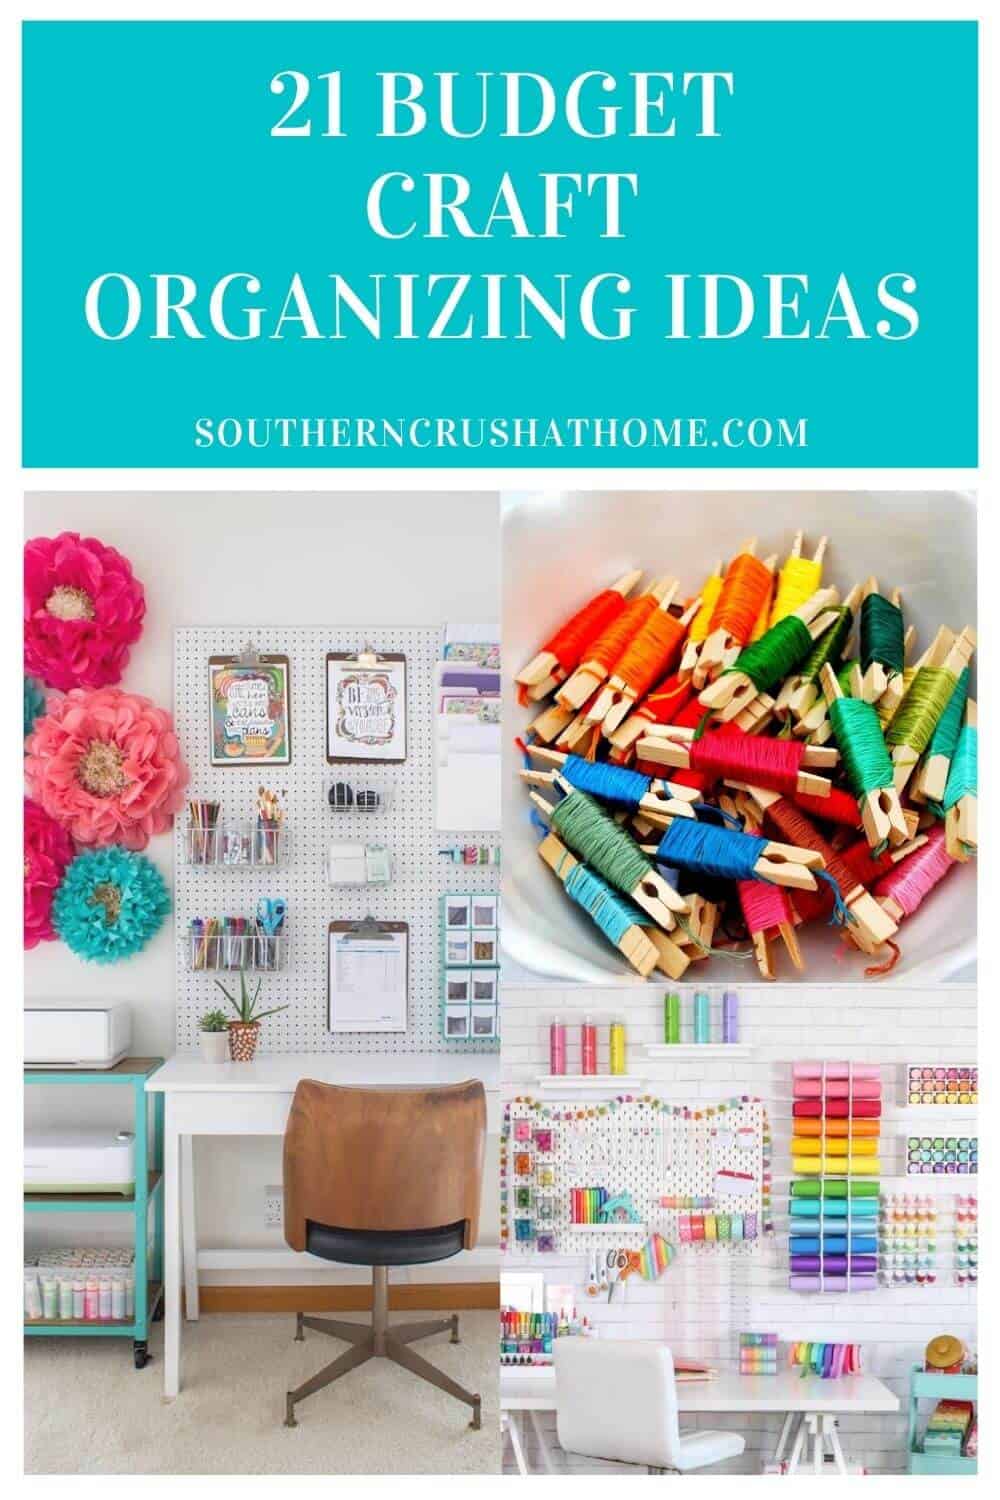 Craft Room Organization Ideas on a Budget - Trusscore